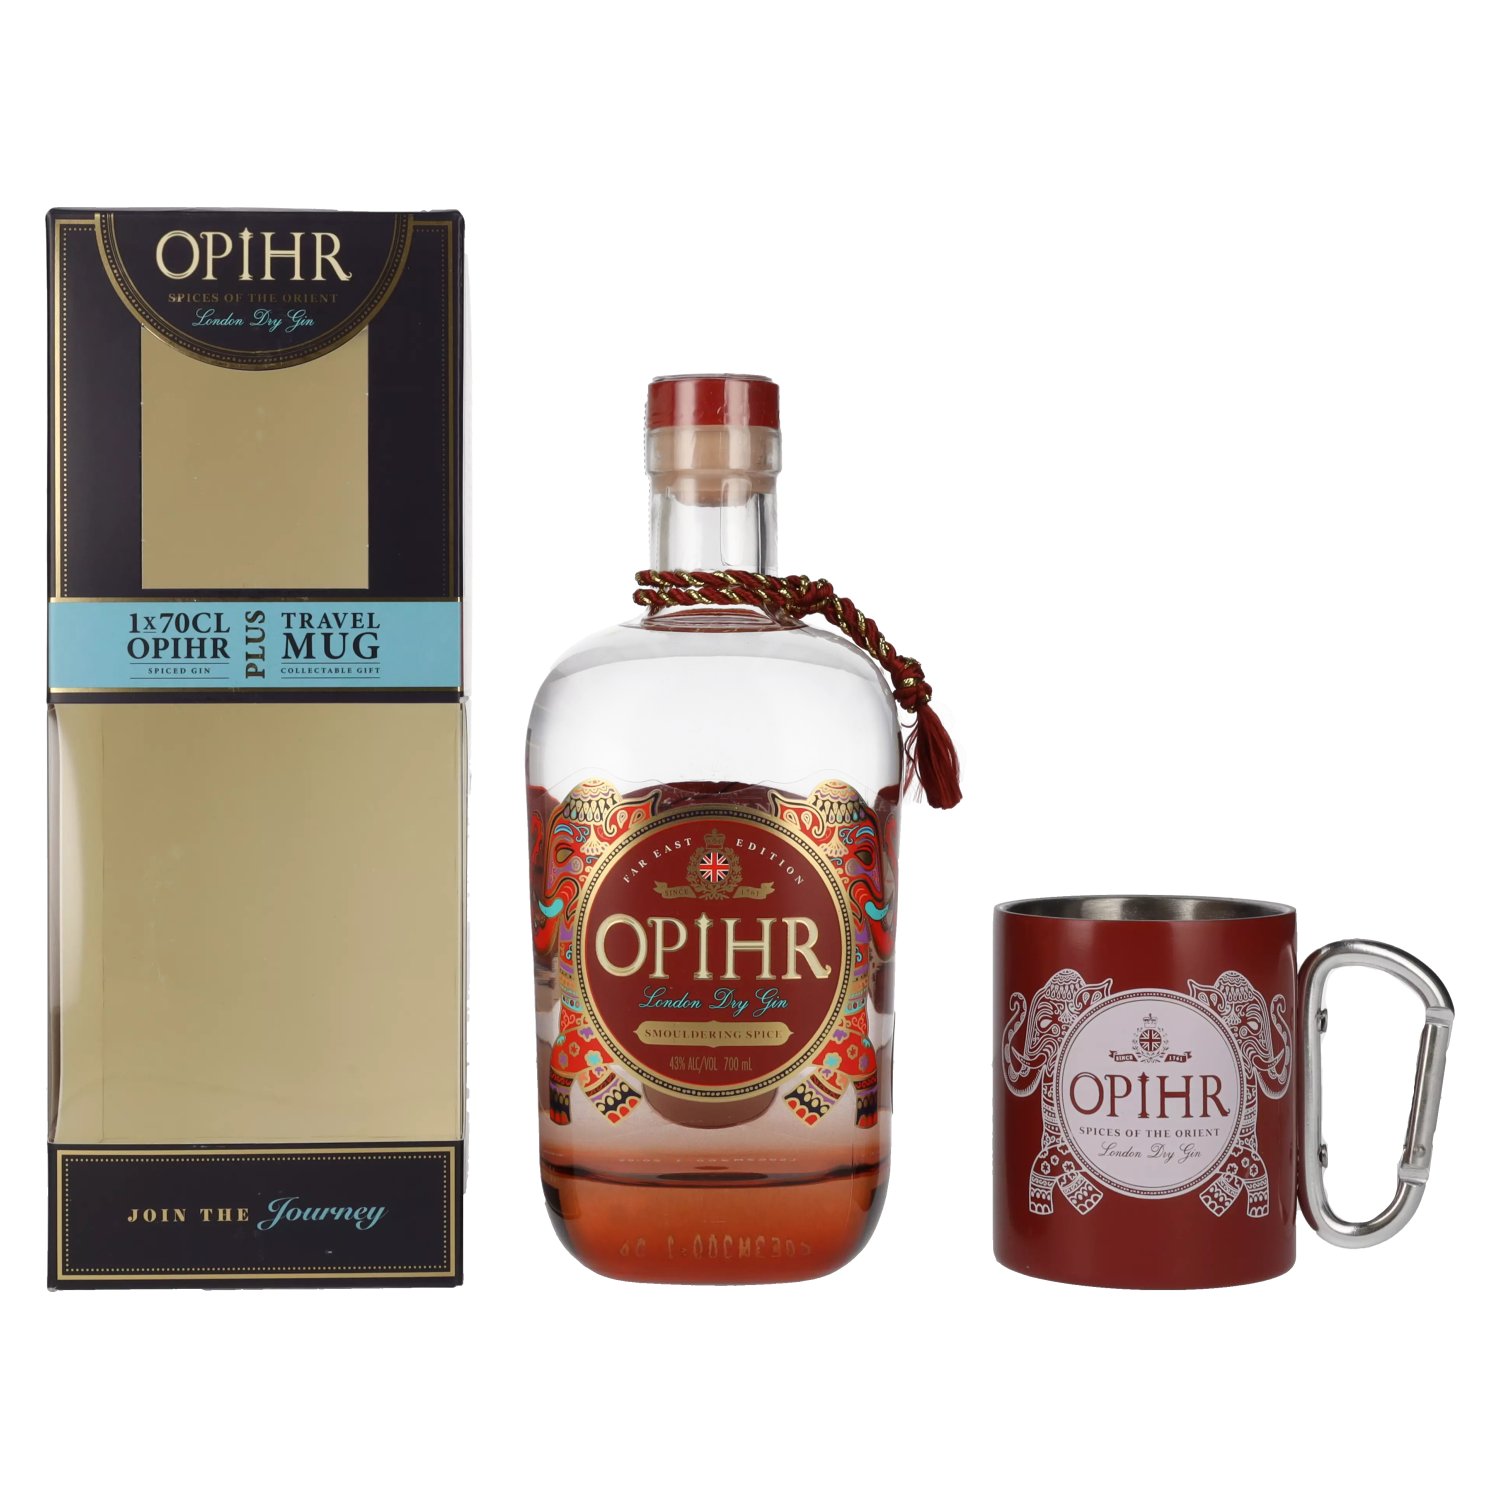 Opihr London Dry Gin FAR EAST EDITION 43% Vol. 0,7l in Geschenkbox mit  Travel Mug